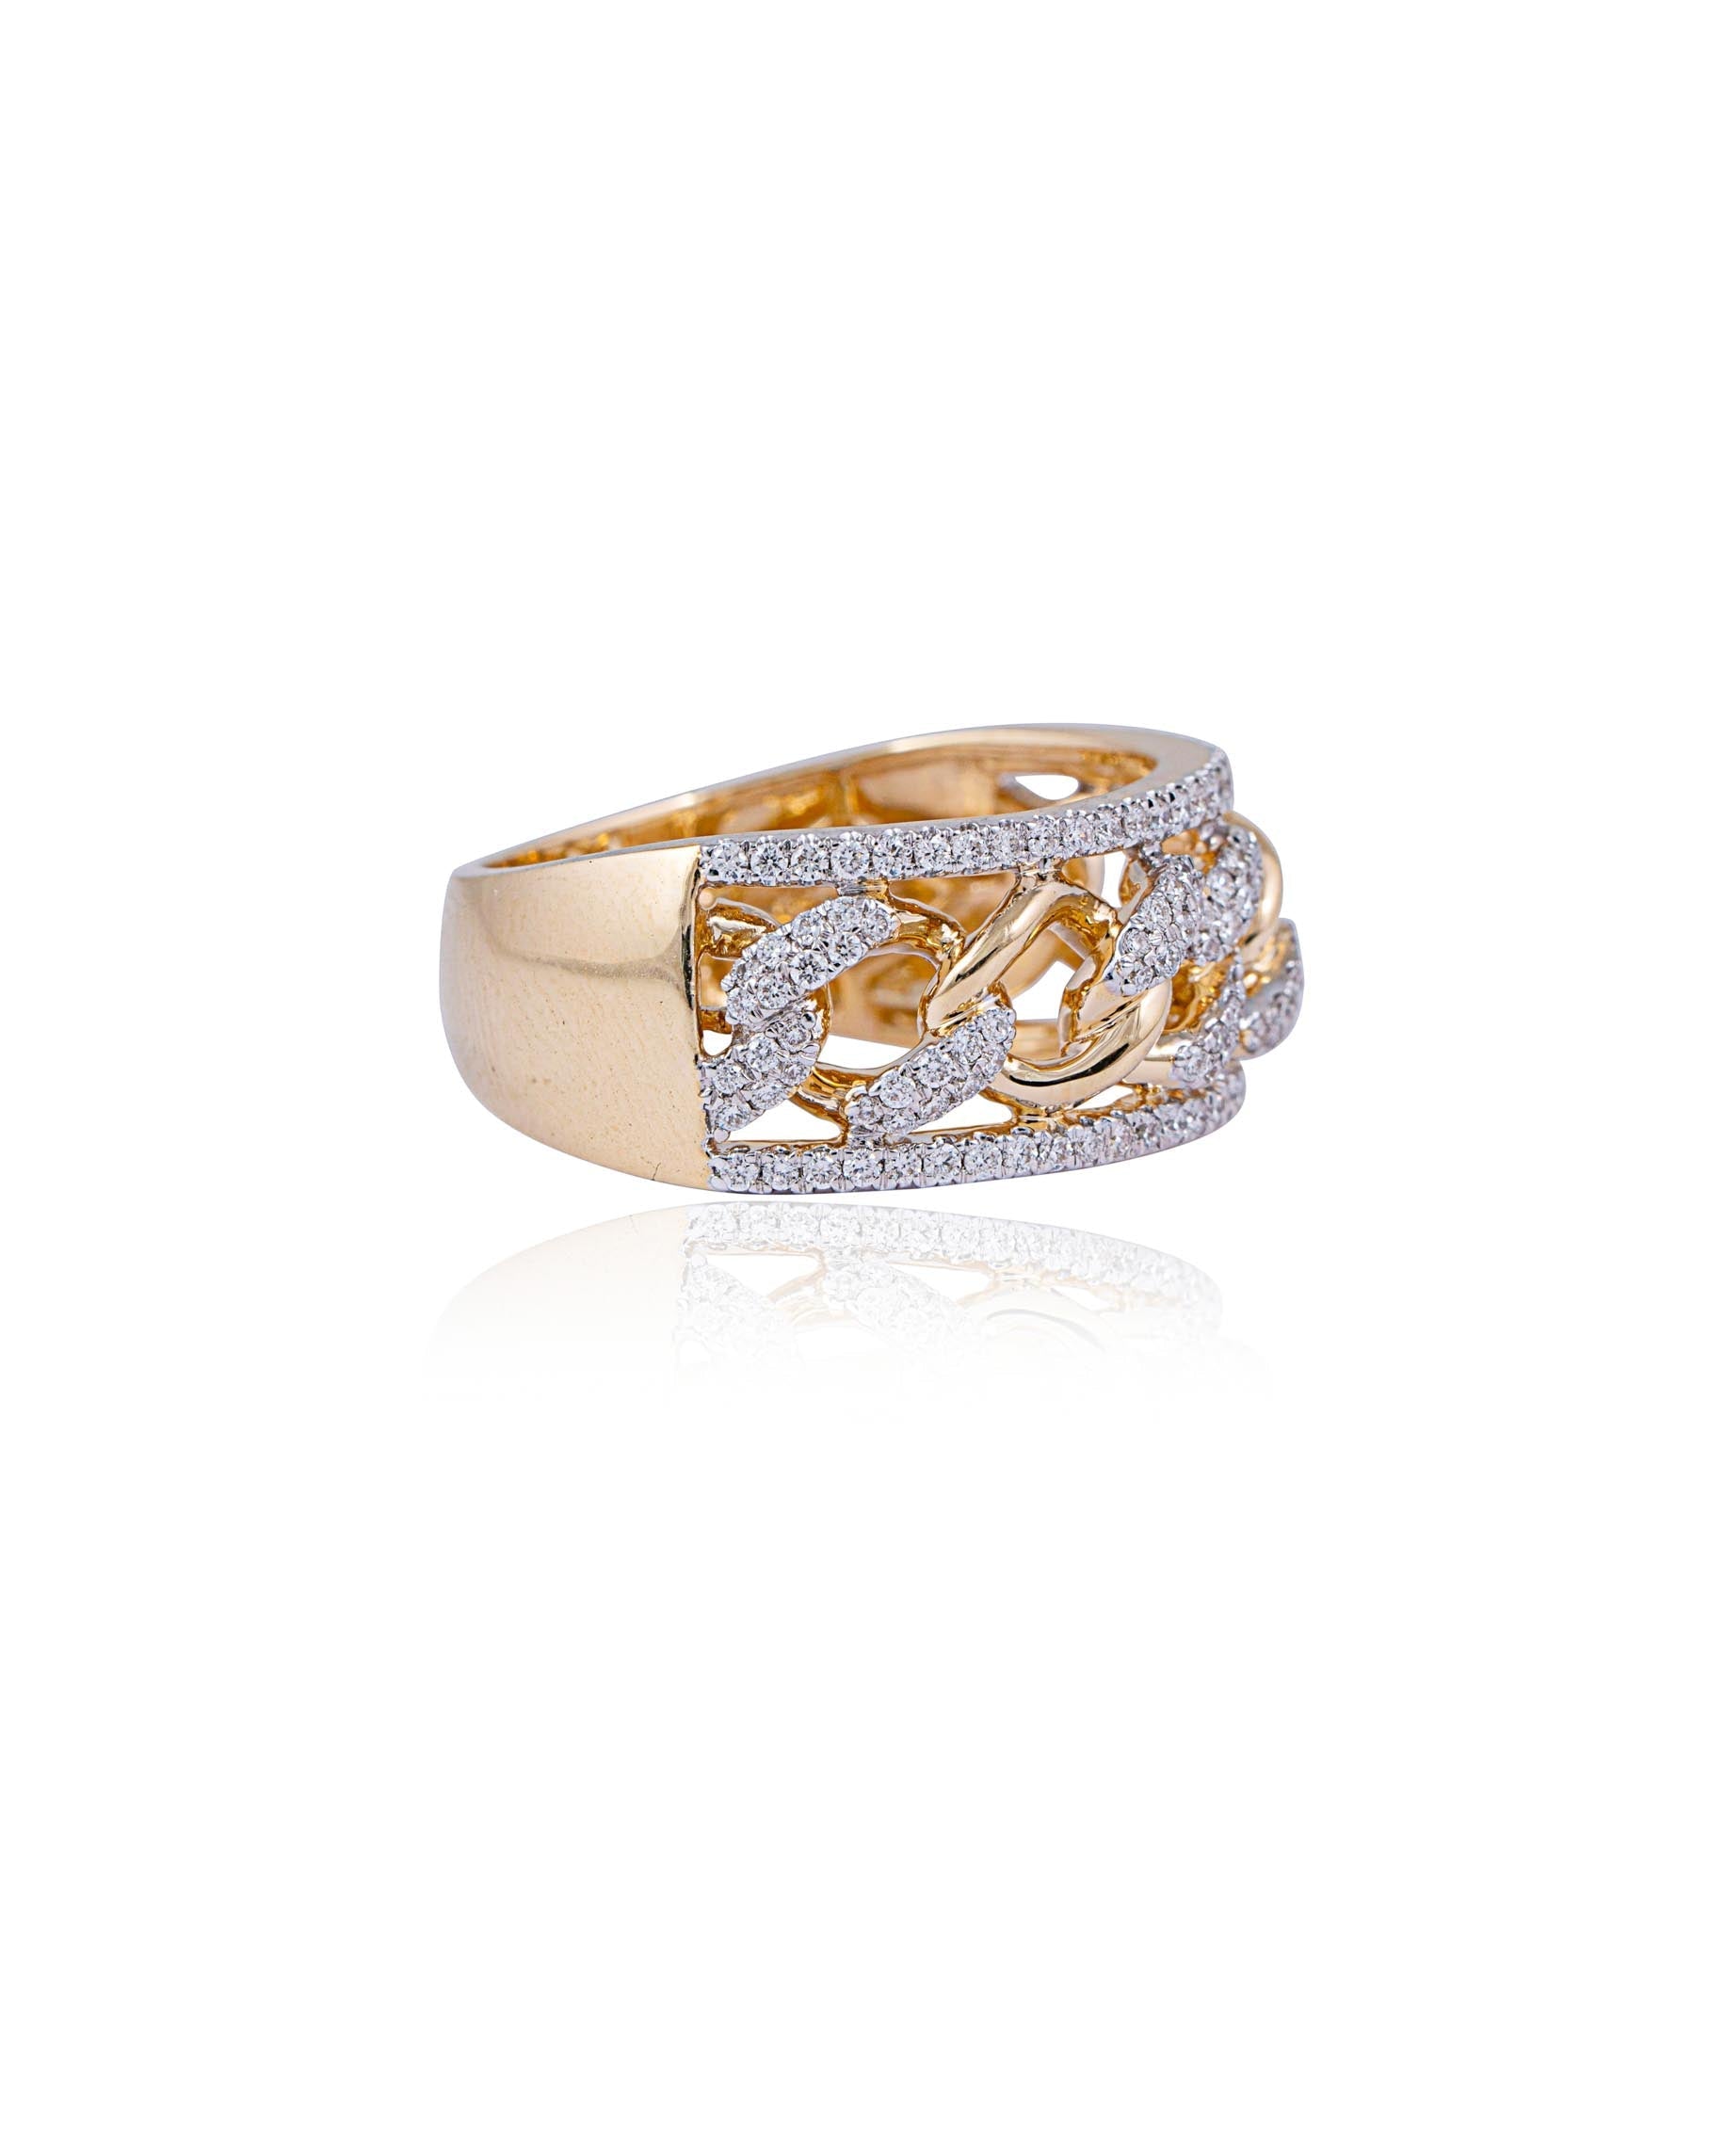 Engagement Rings for Women's , White Gold Bridal Ring SGT629